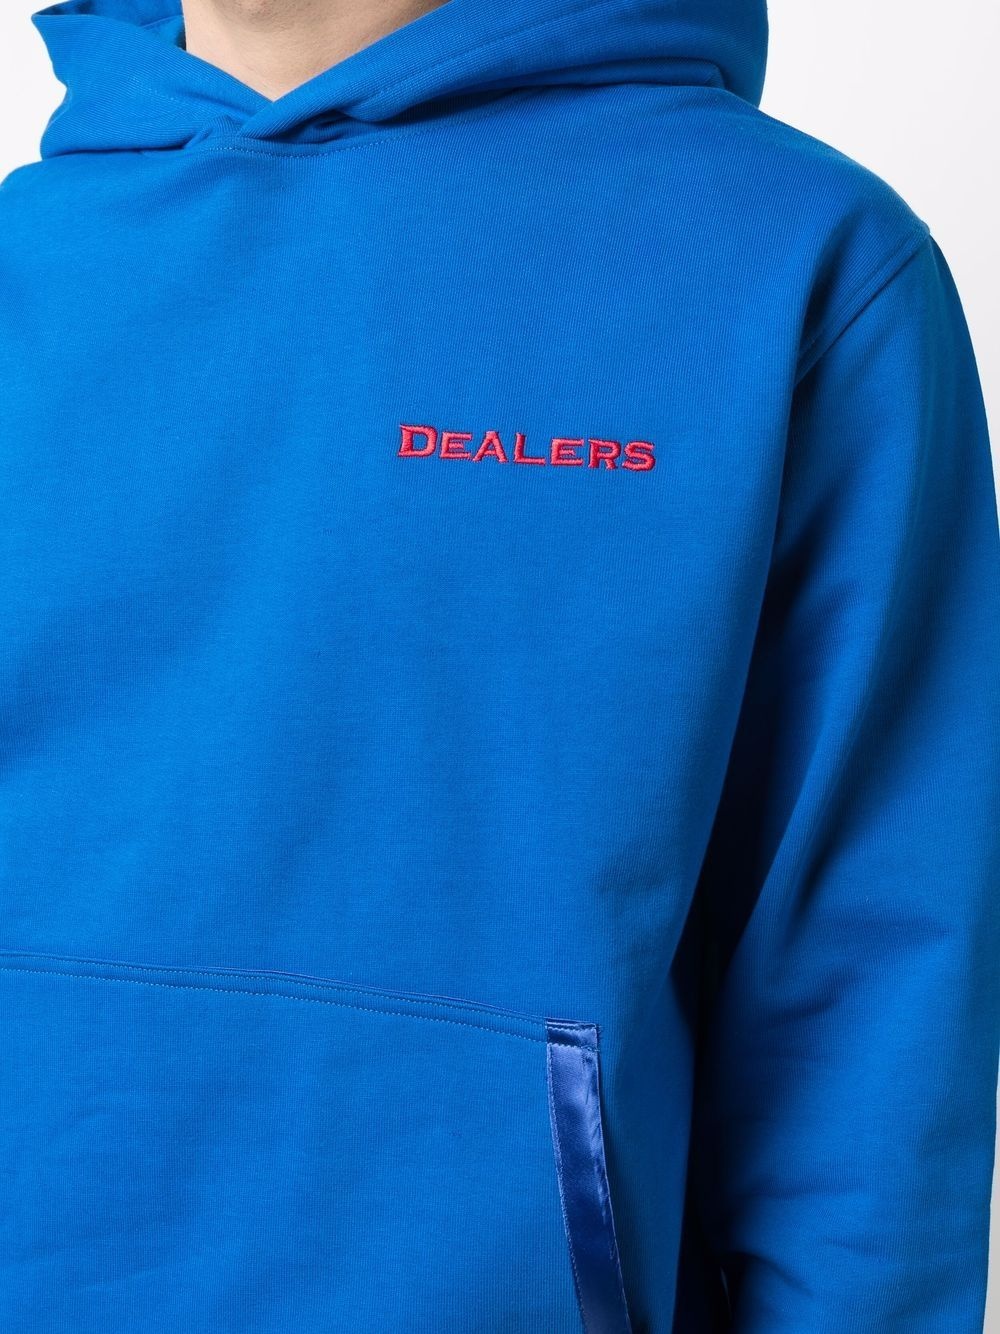 embroidered-Dealers hoodie - 5